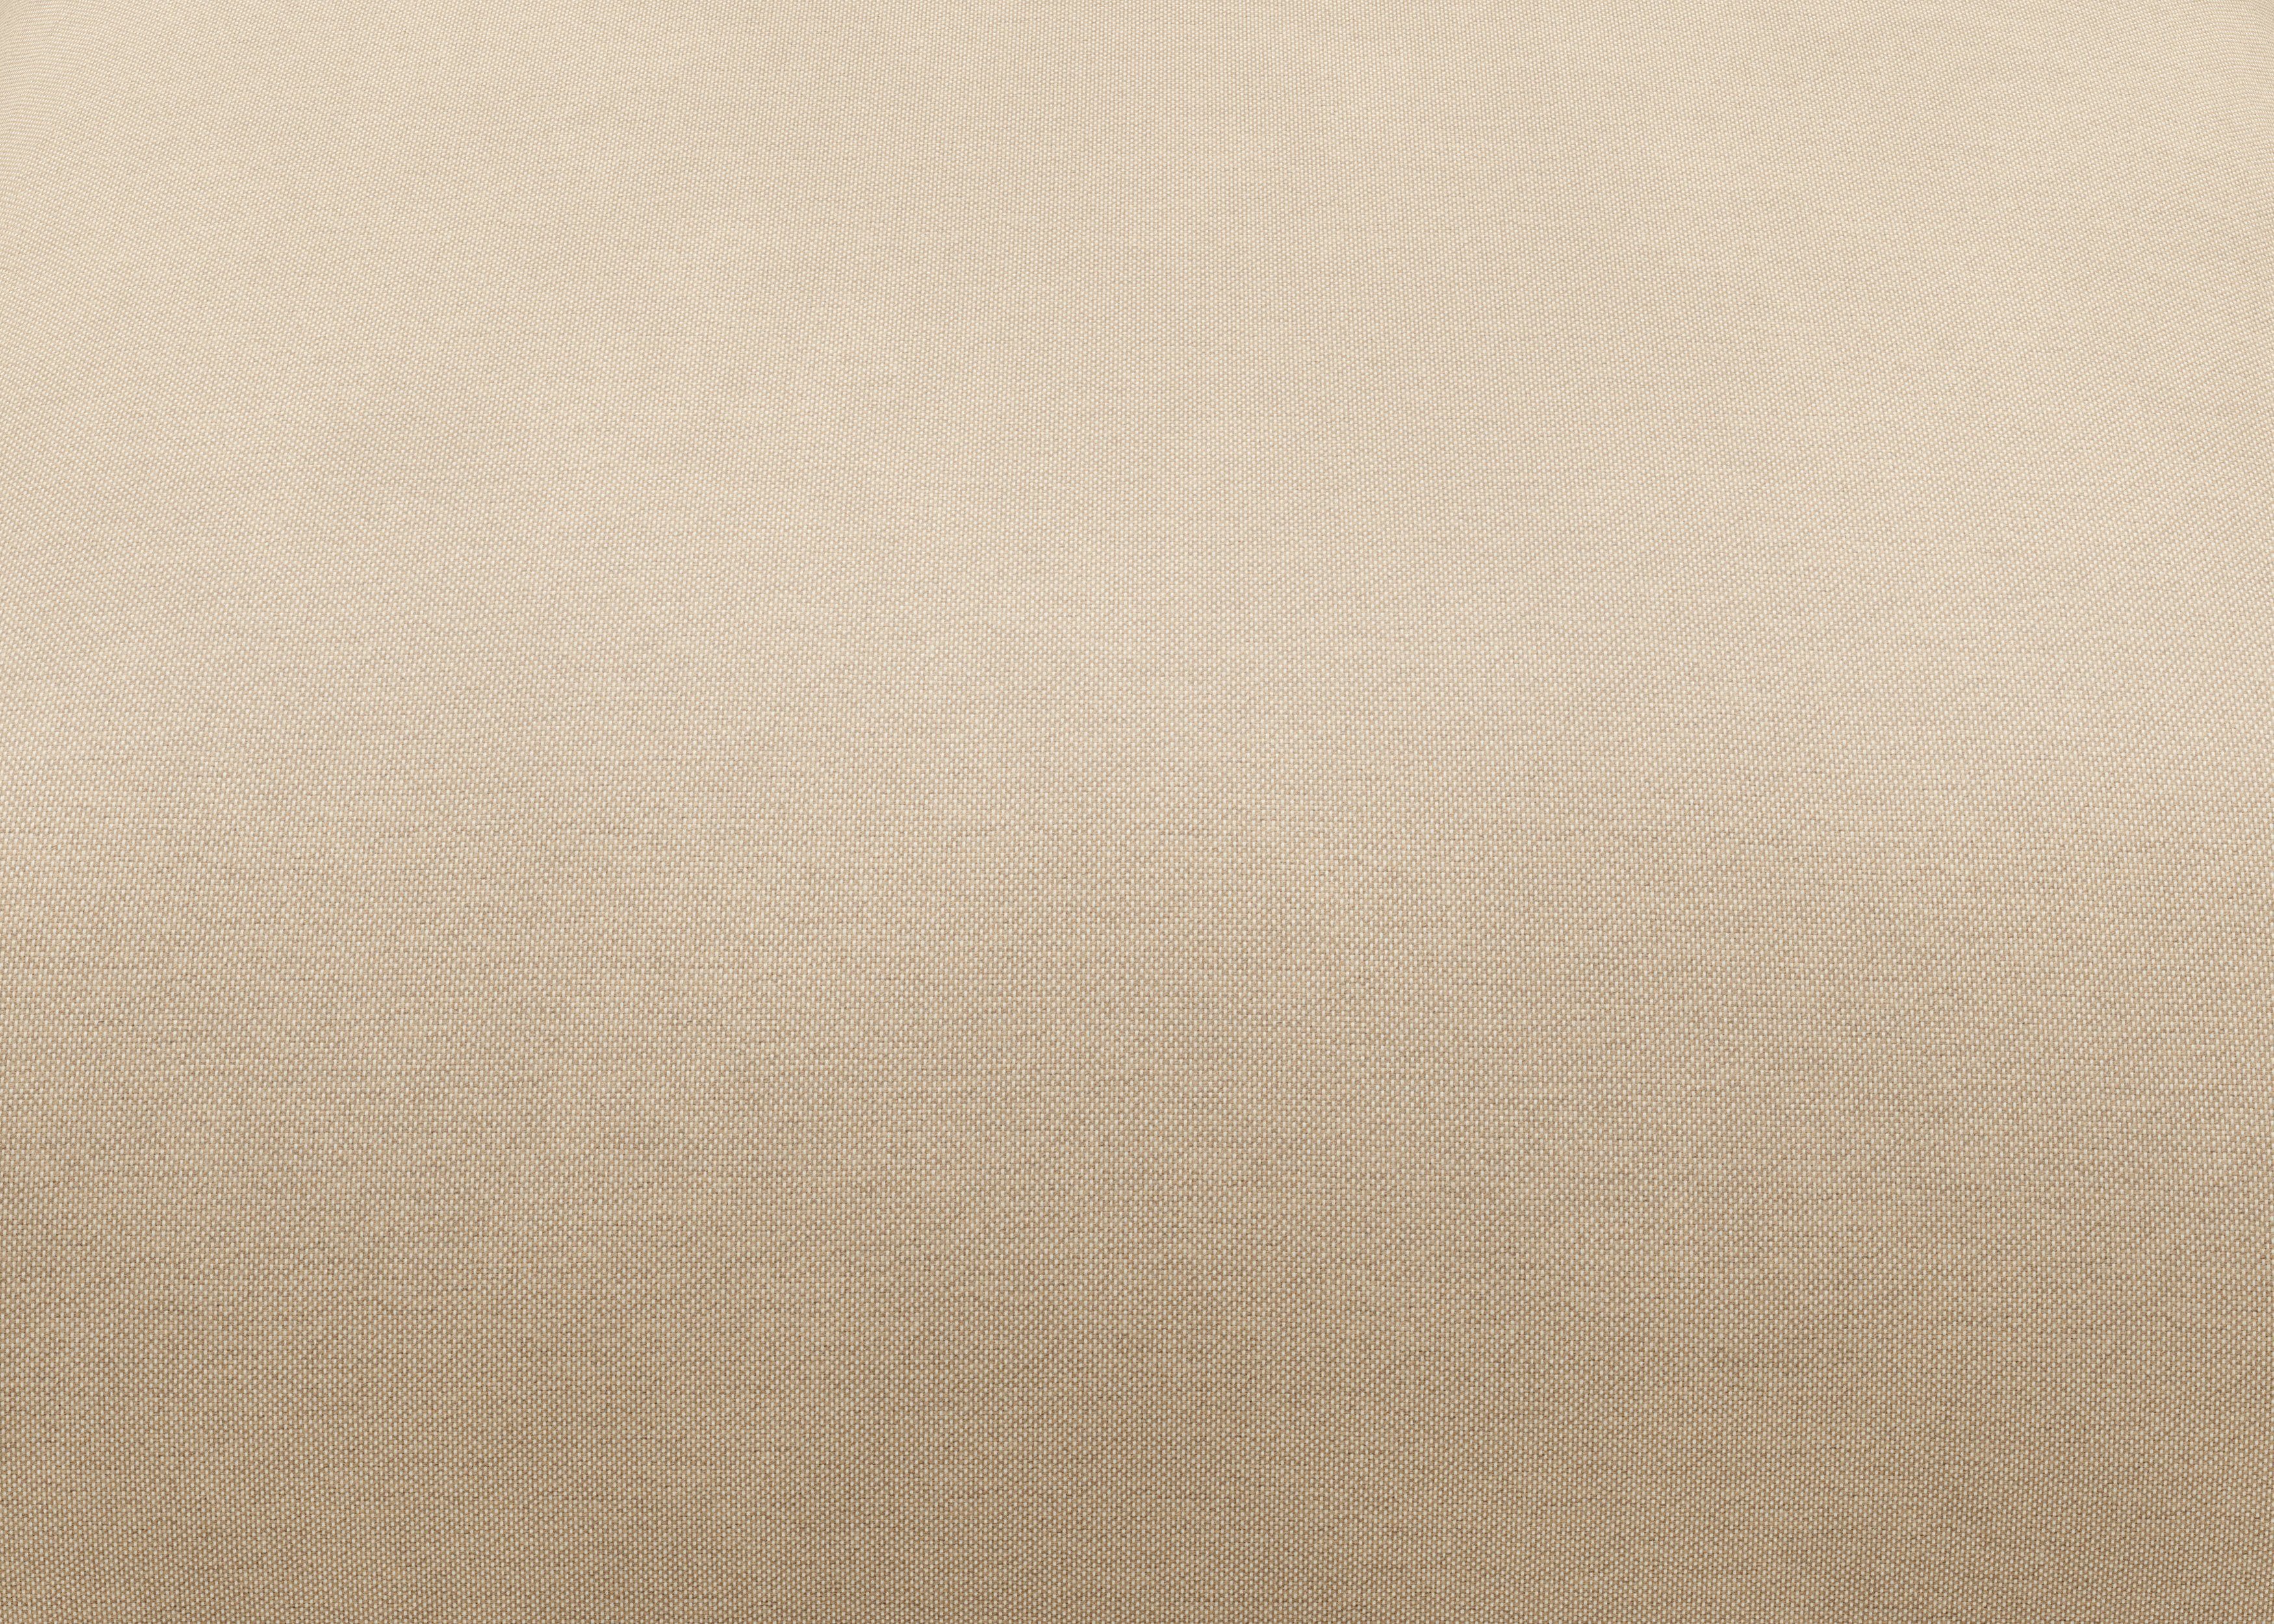 vetsak®-Two Seat Lounge Sofa S Canvas beige